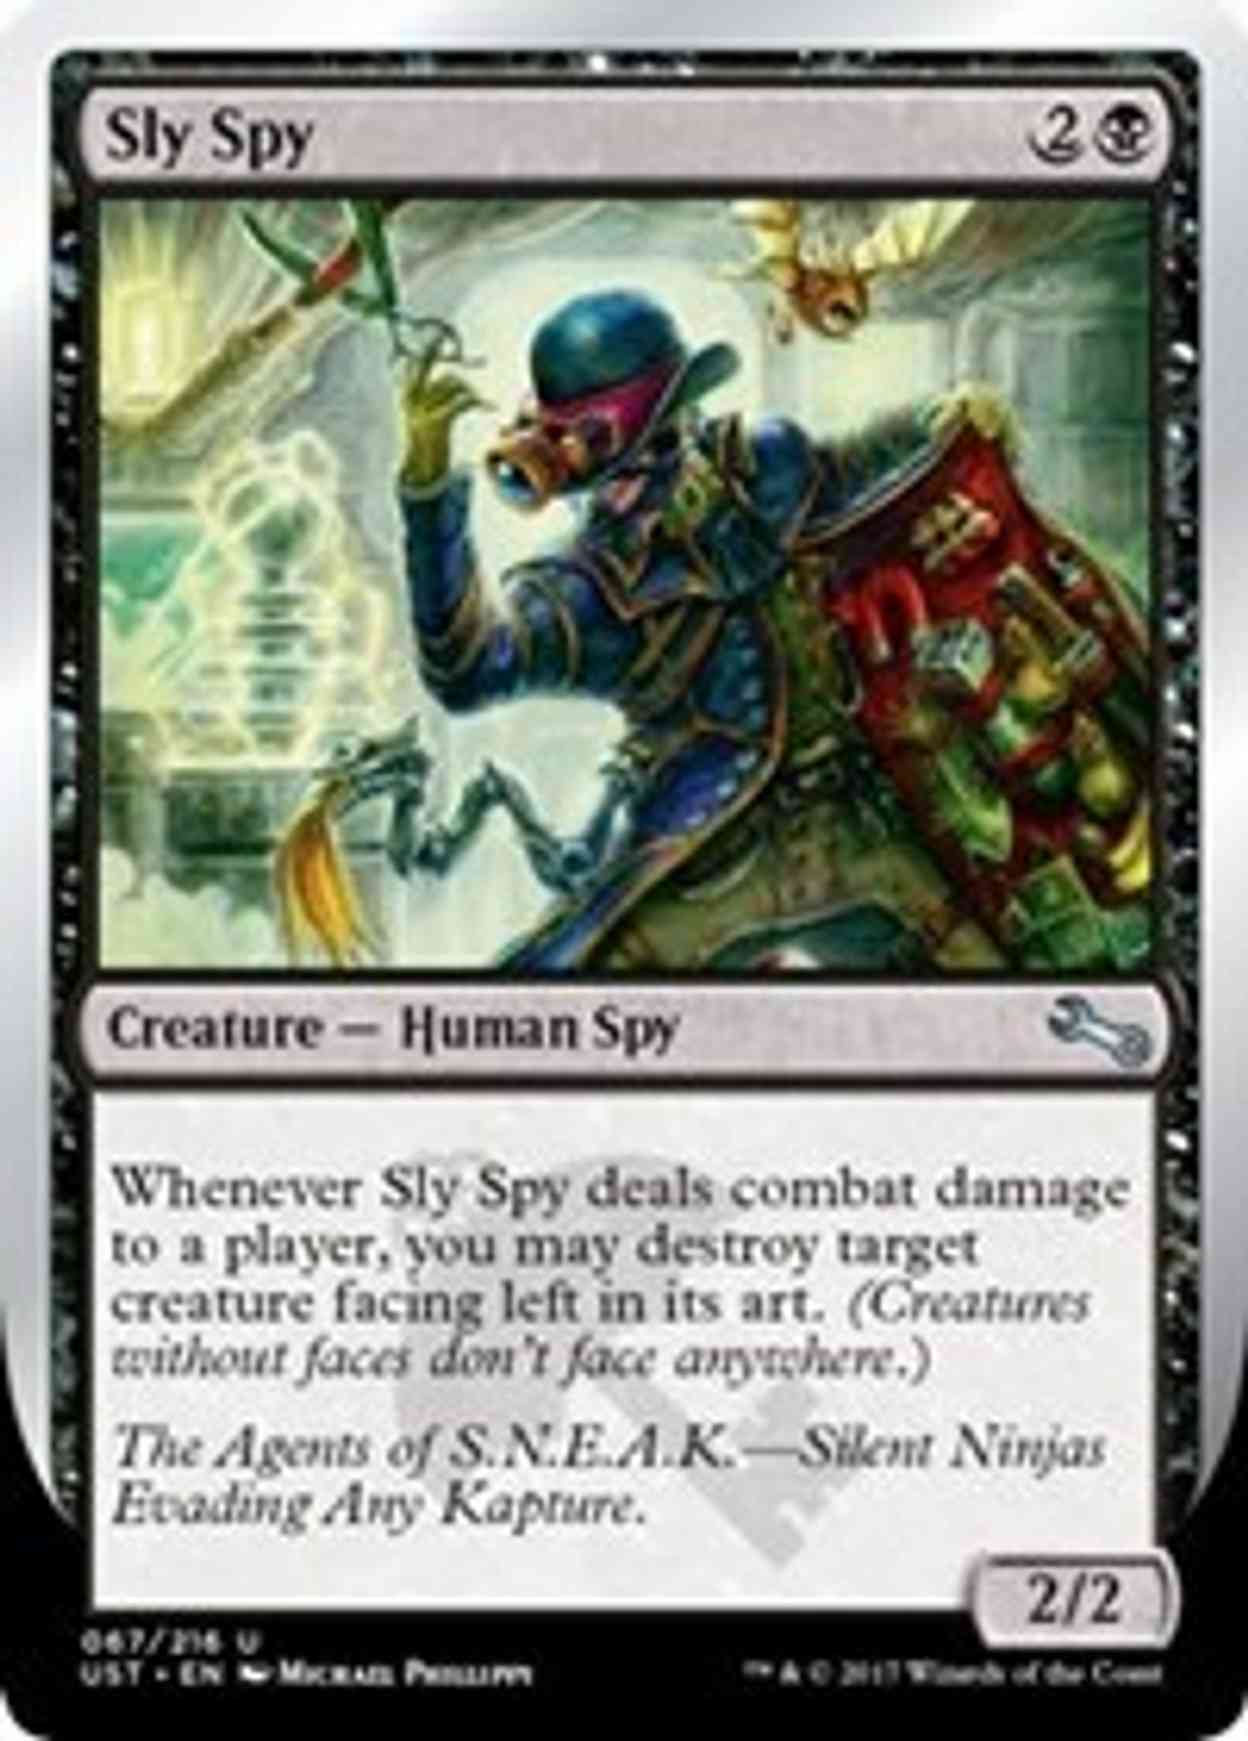 Sly Spy (B) magic card front